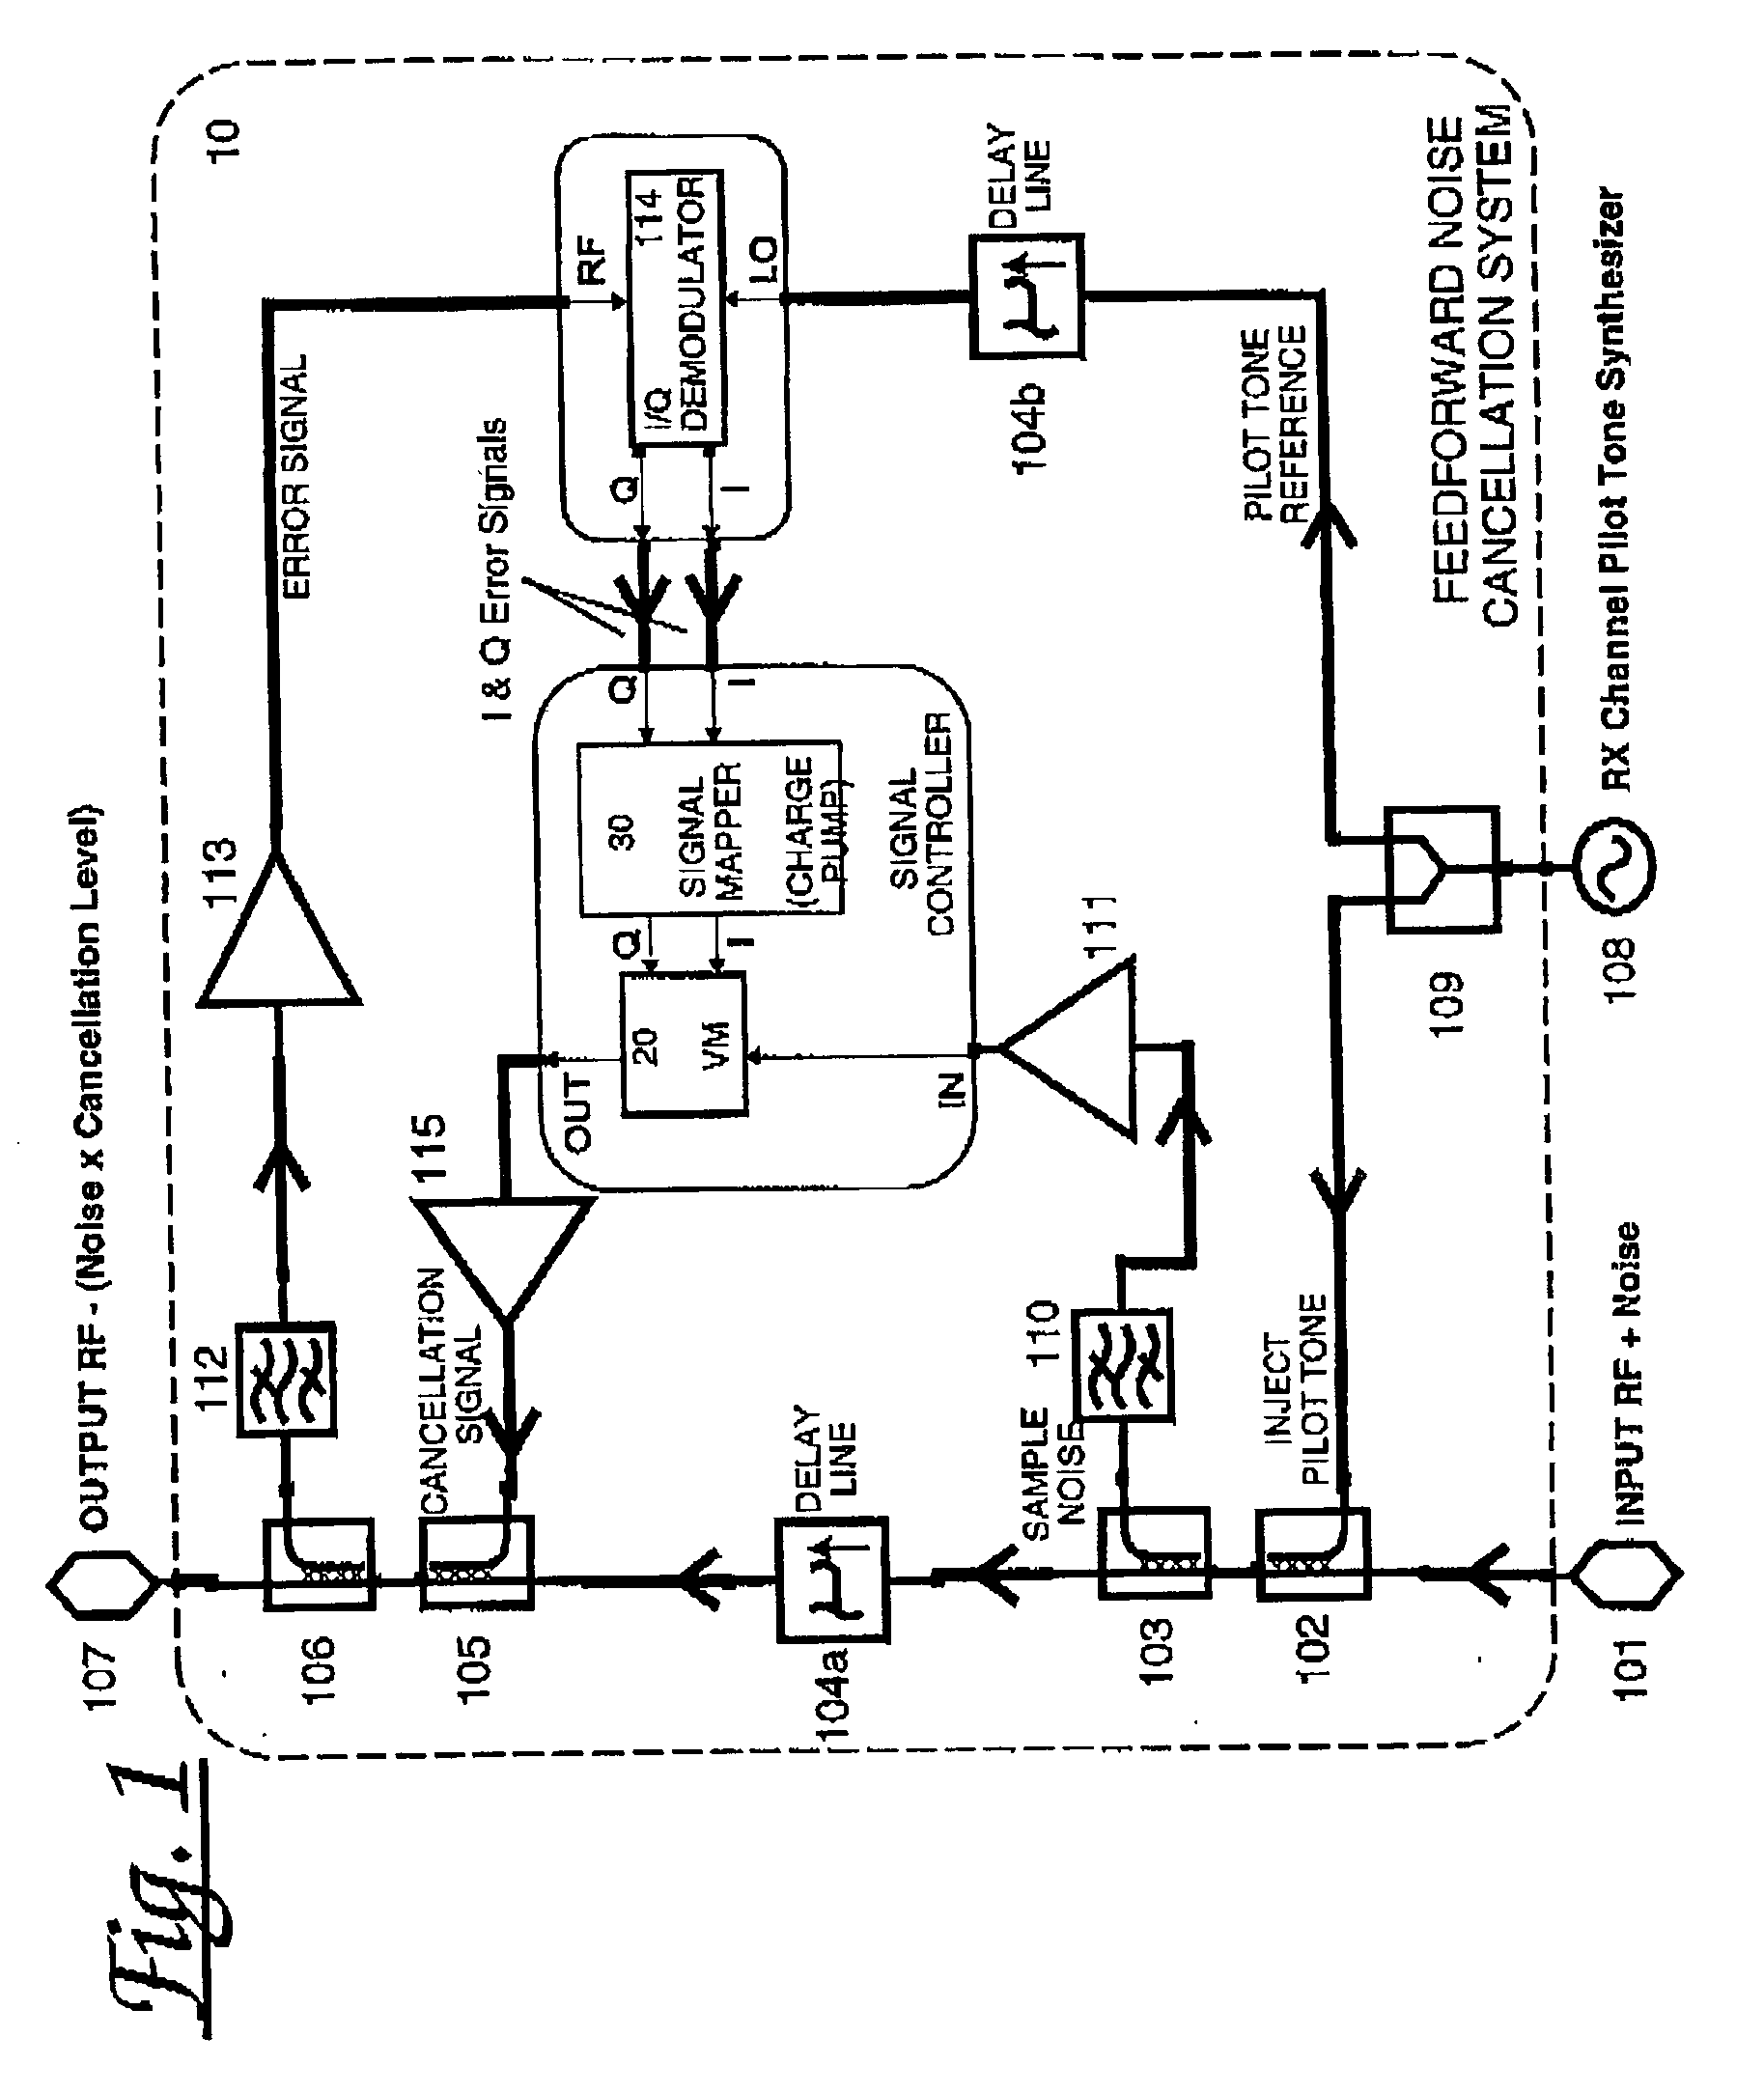 Adaptive feedforward noise cancellation circuit